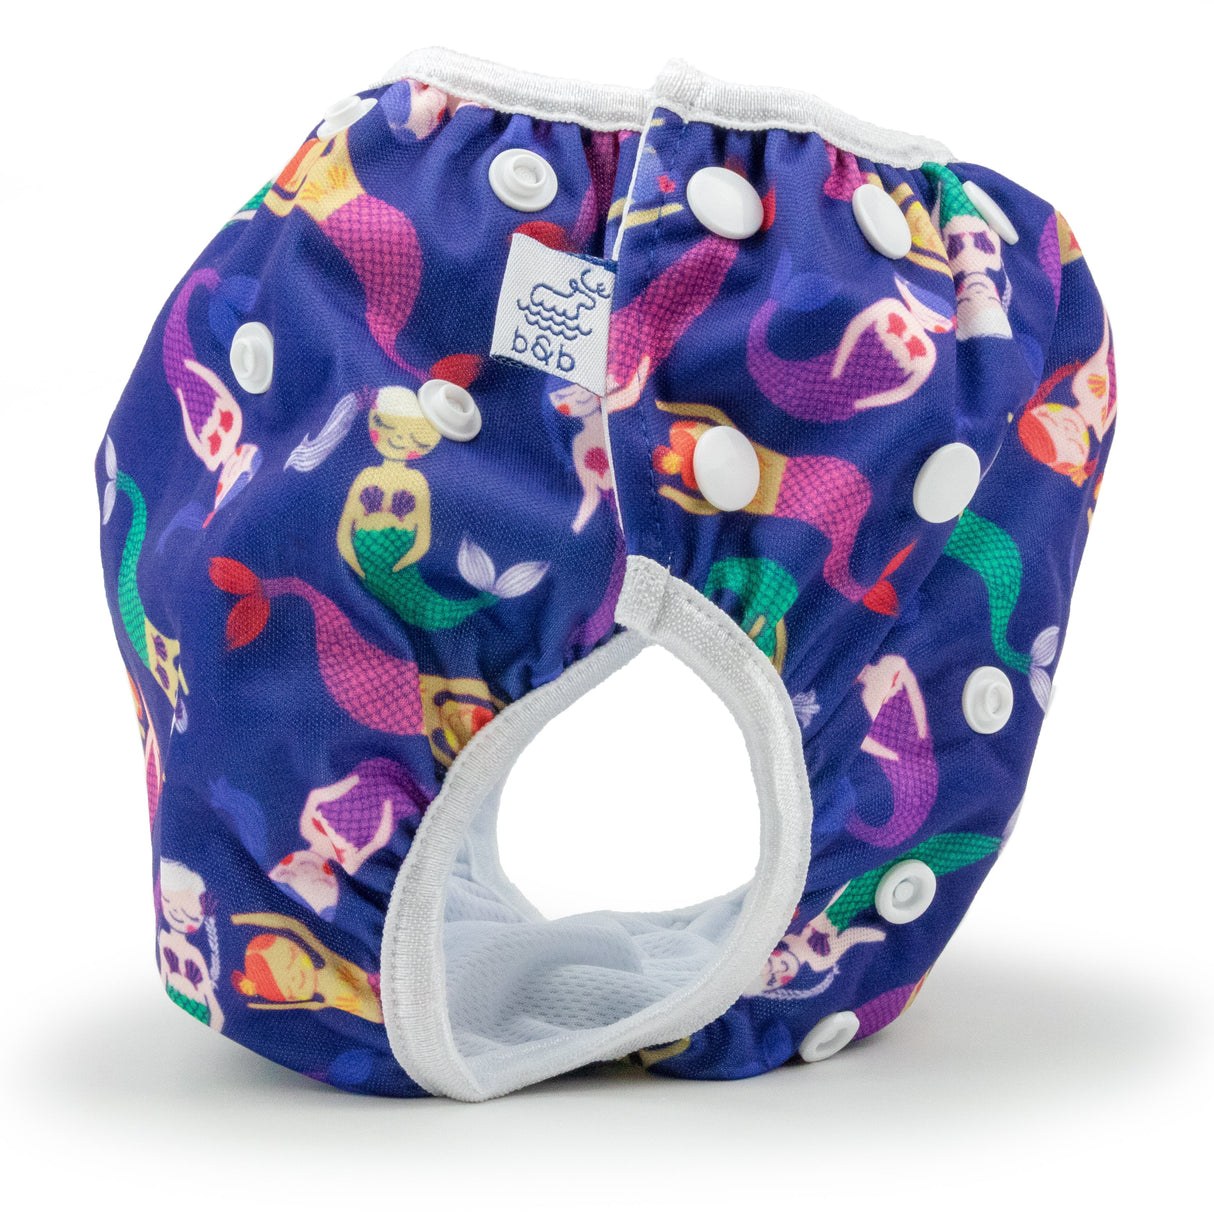 Toddler Size Mermaids Reusable Swim Diaper, Adjustable 2-5 Years by Beau & Belle Littles